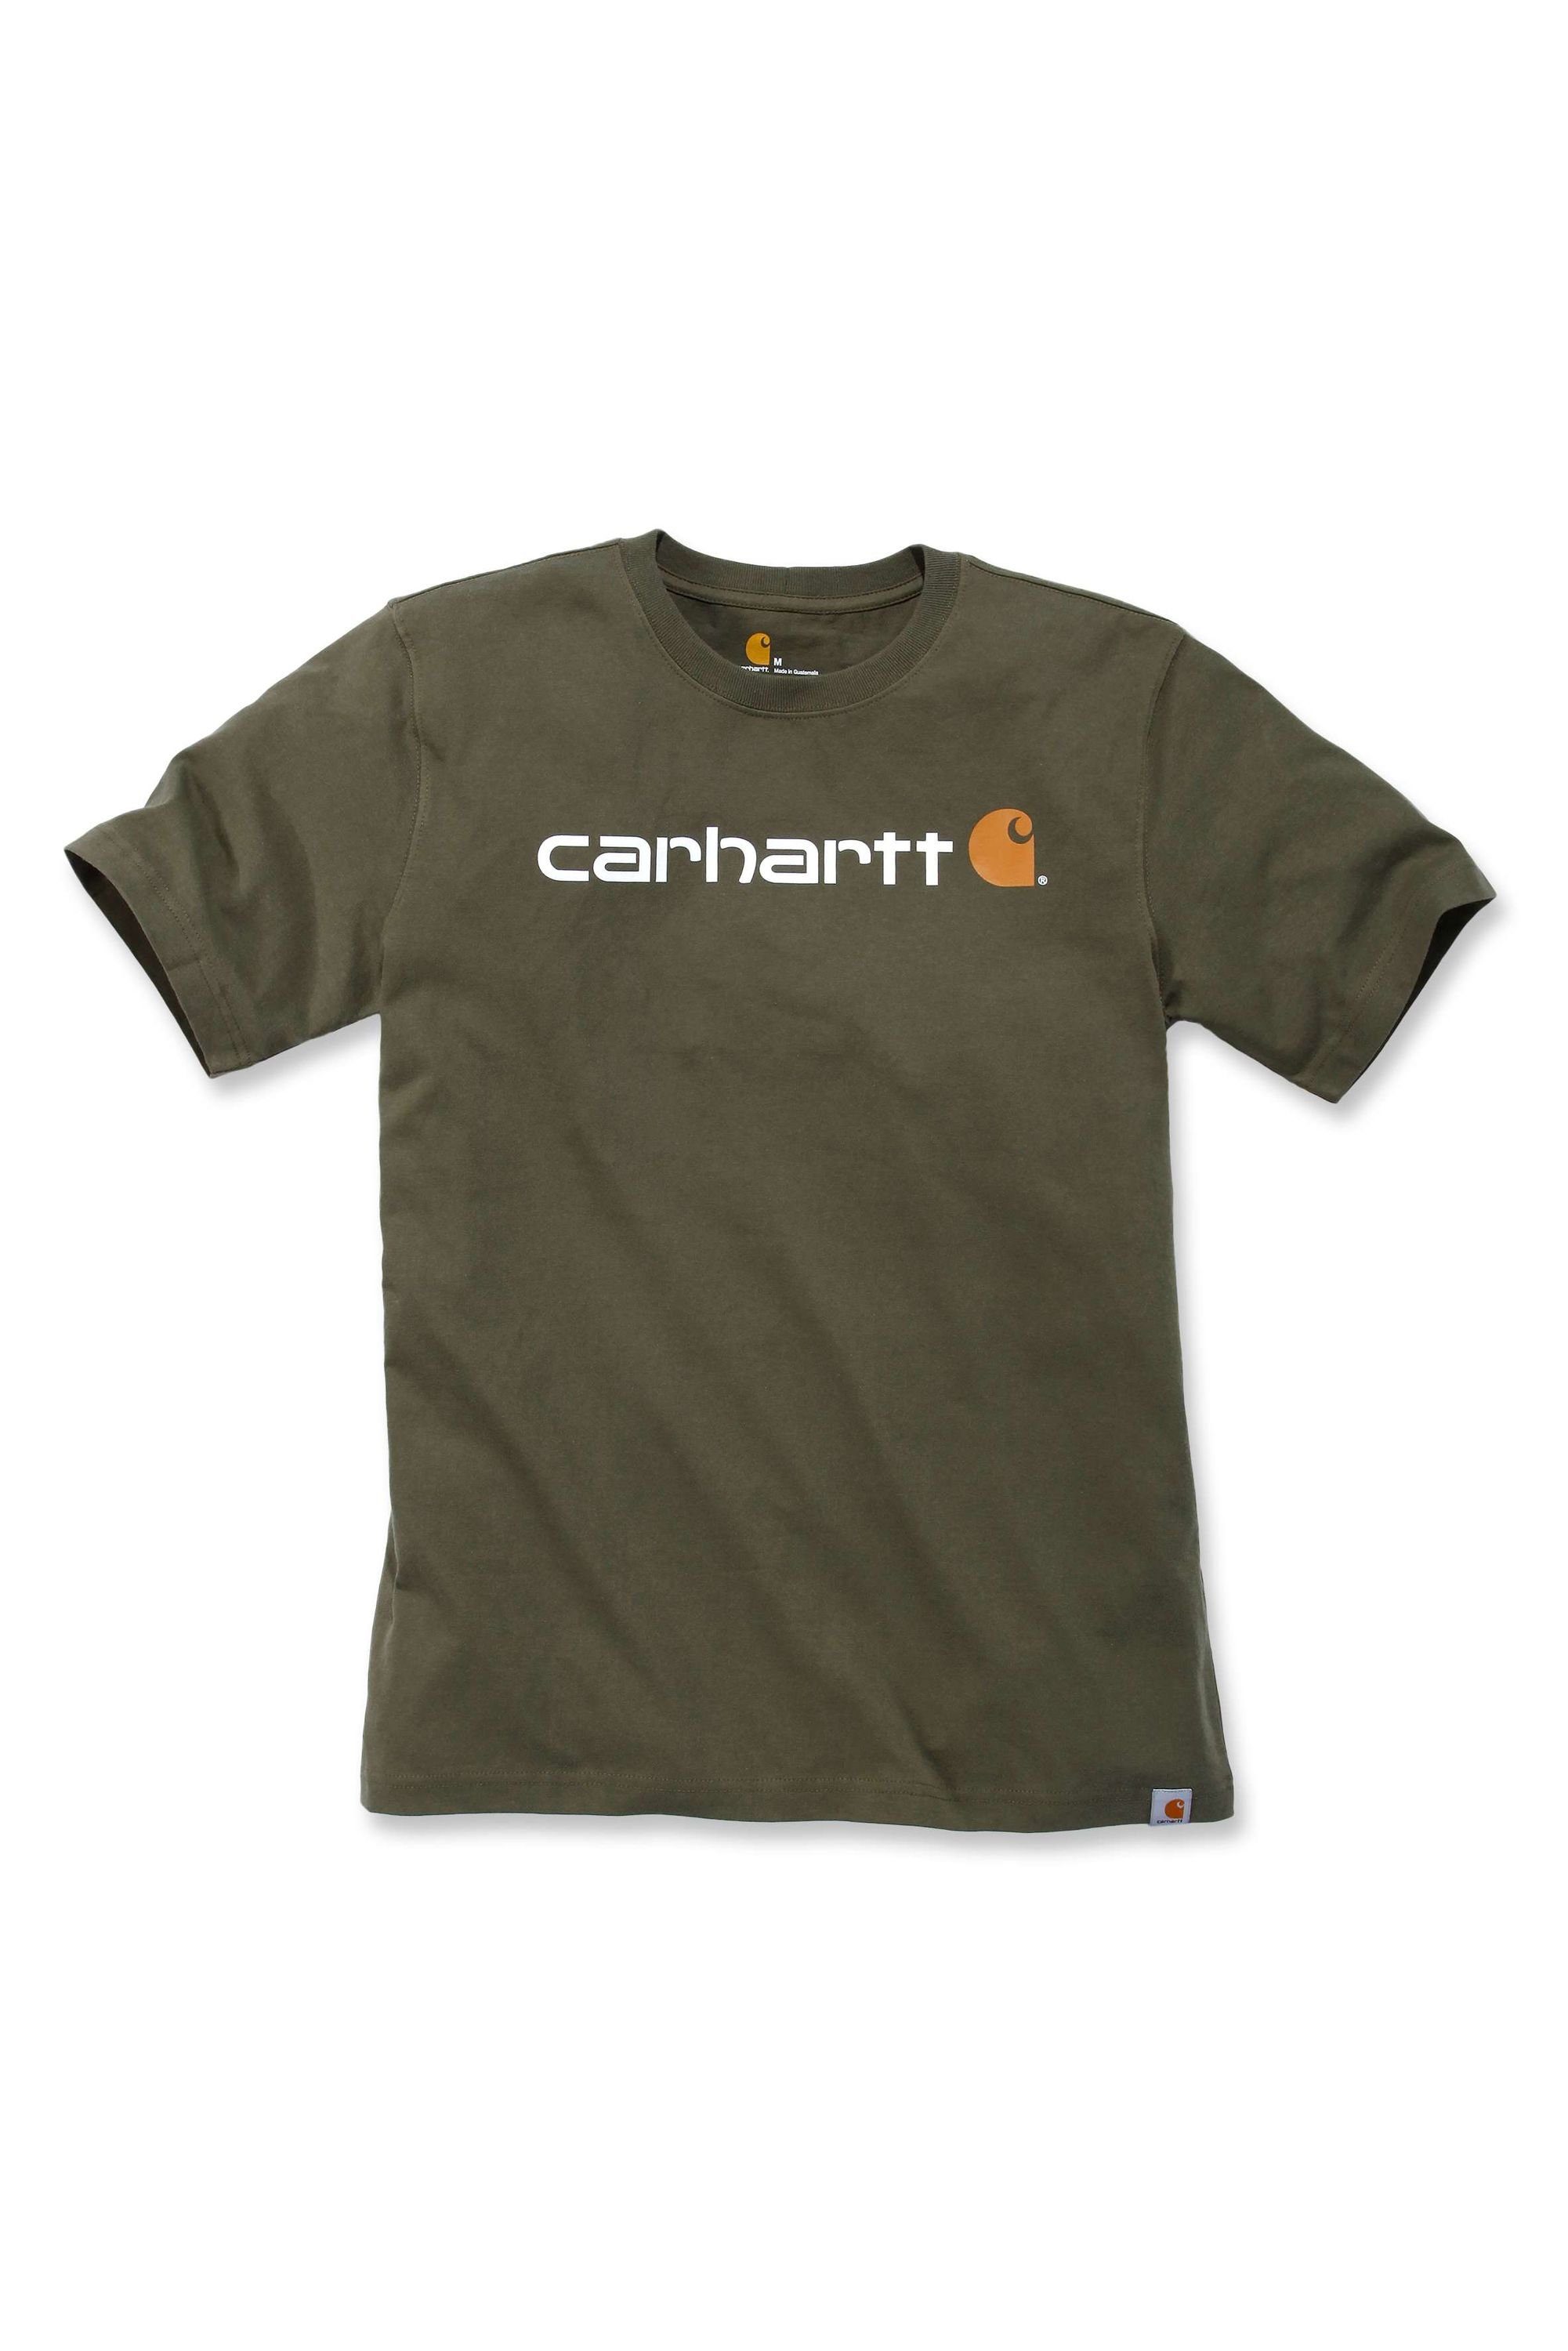 S/S Carhartt Brust T-Shirt auf der LOGO T-SHIRT Logo 103361 Carhartt (1-tlg) moonstone CORE